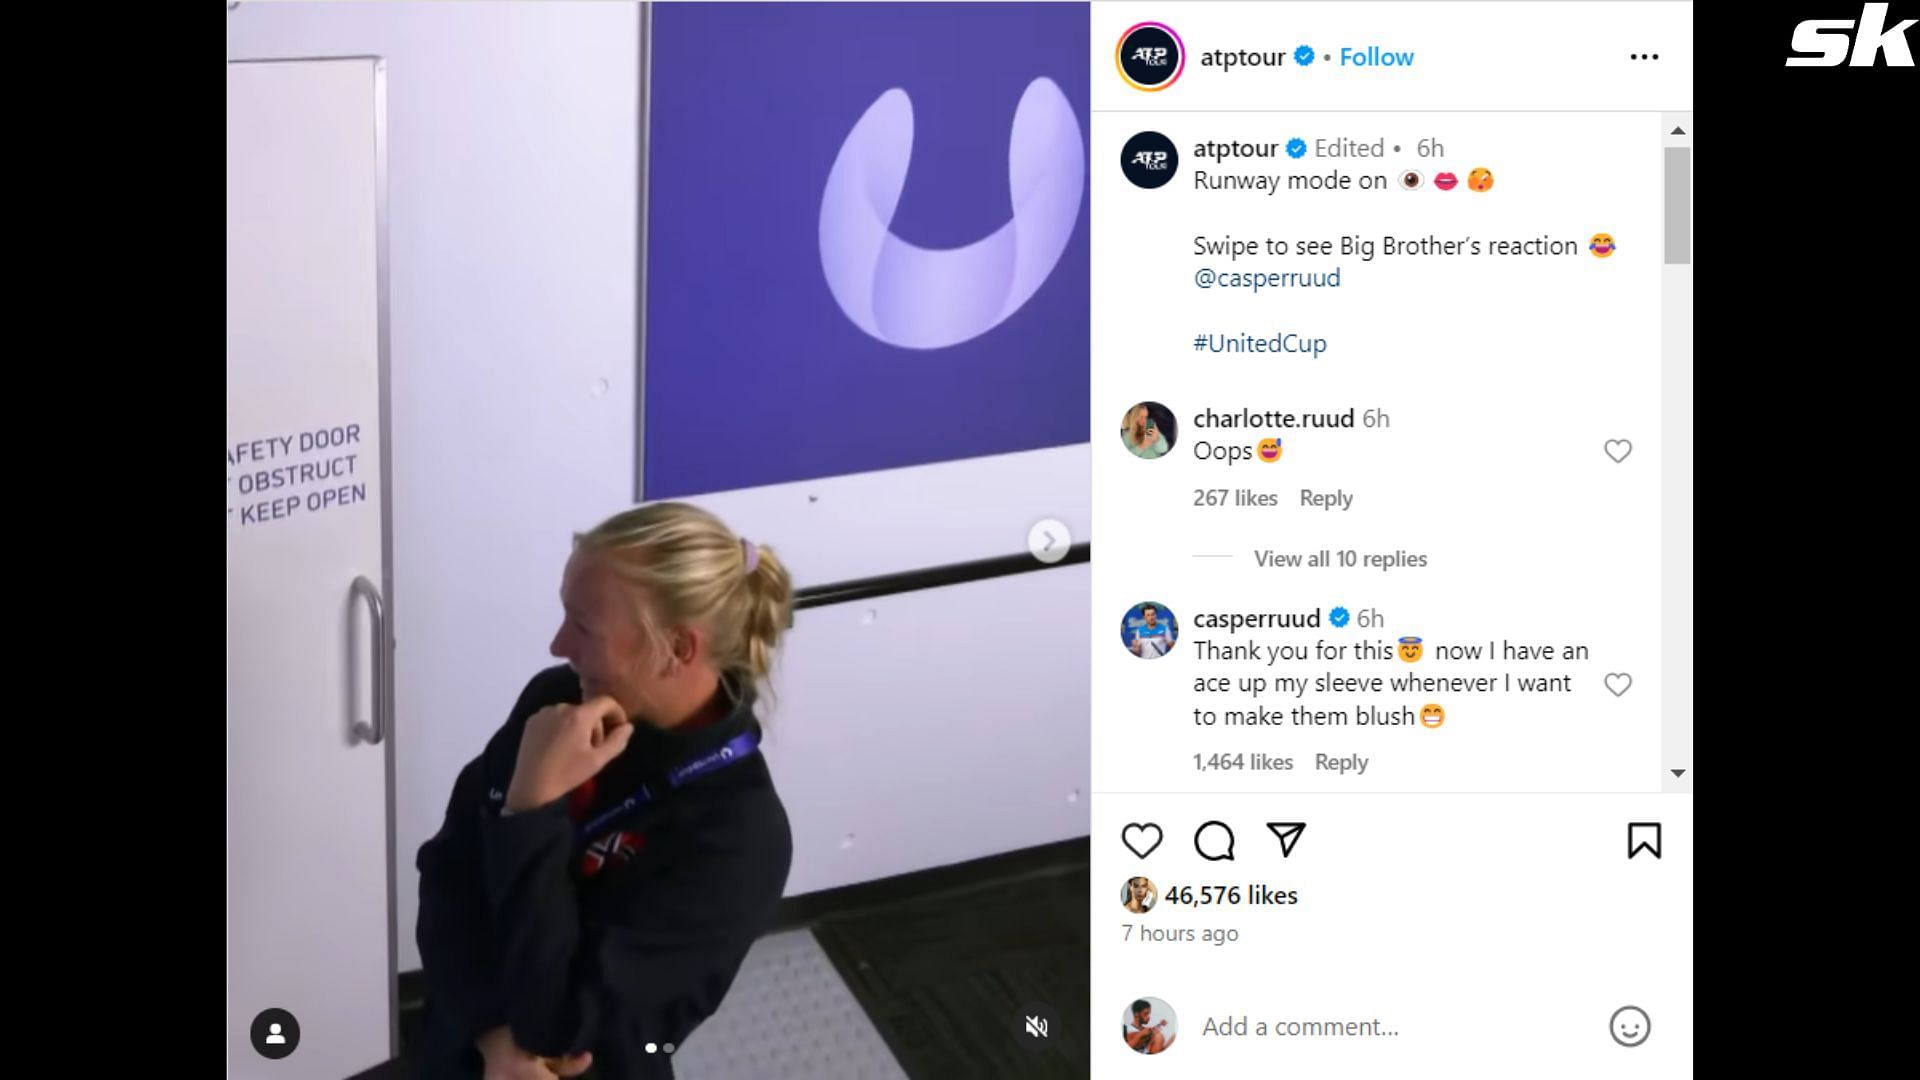 Charlotte Ruud reacts on ATP&#039;s Instagram post - @atptour, Instagram